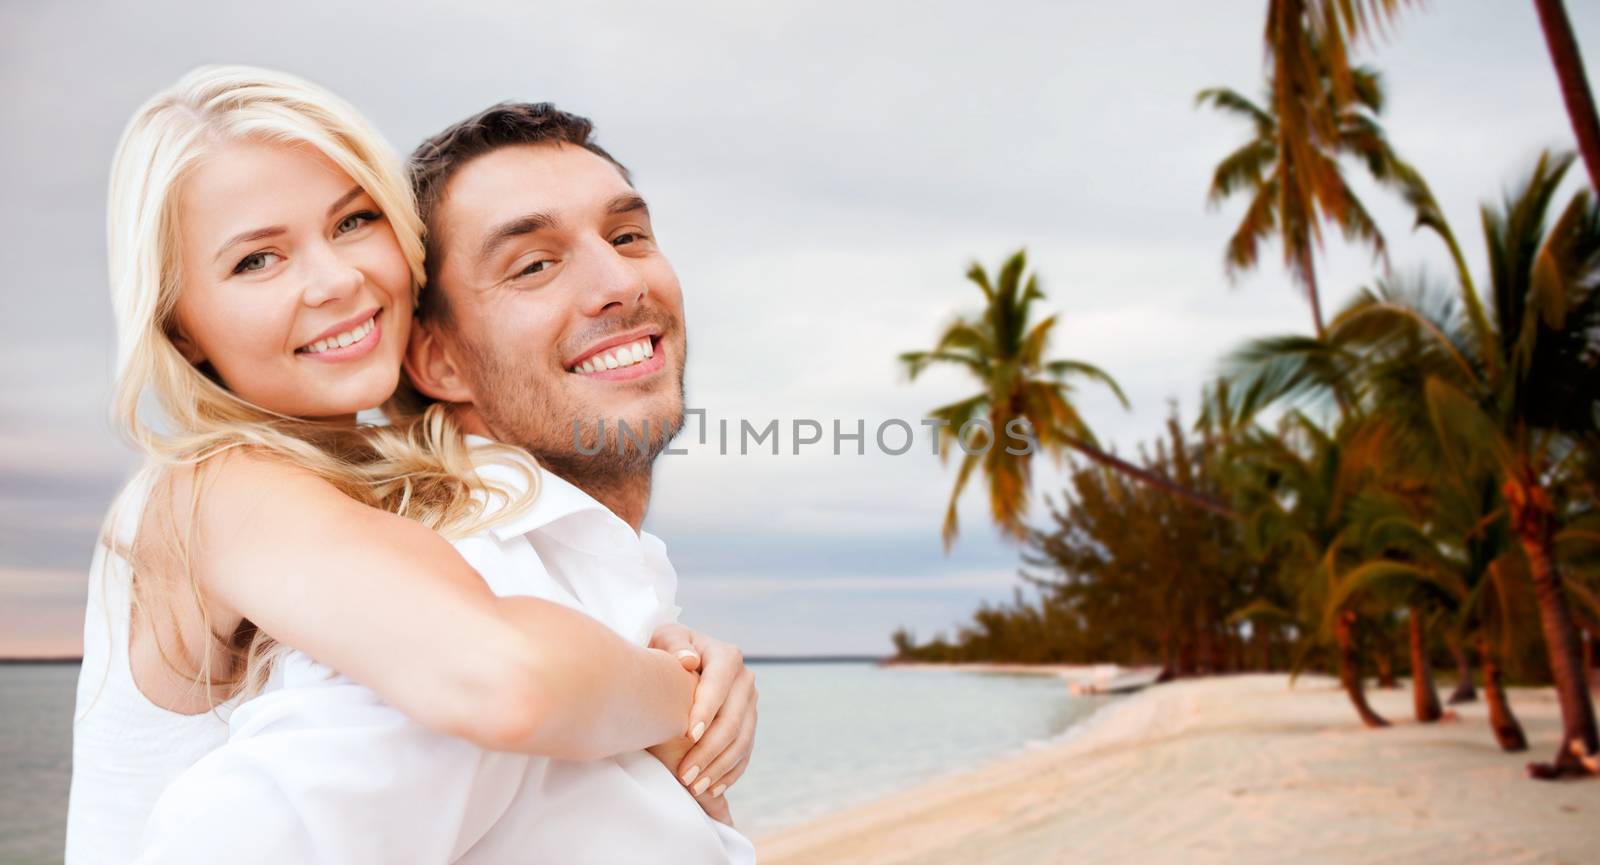 couple having fun and hugging on beach by dolgachov